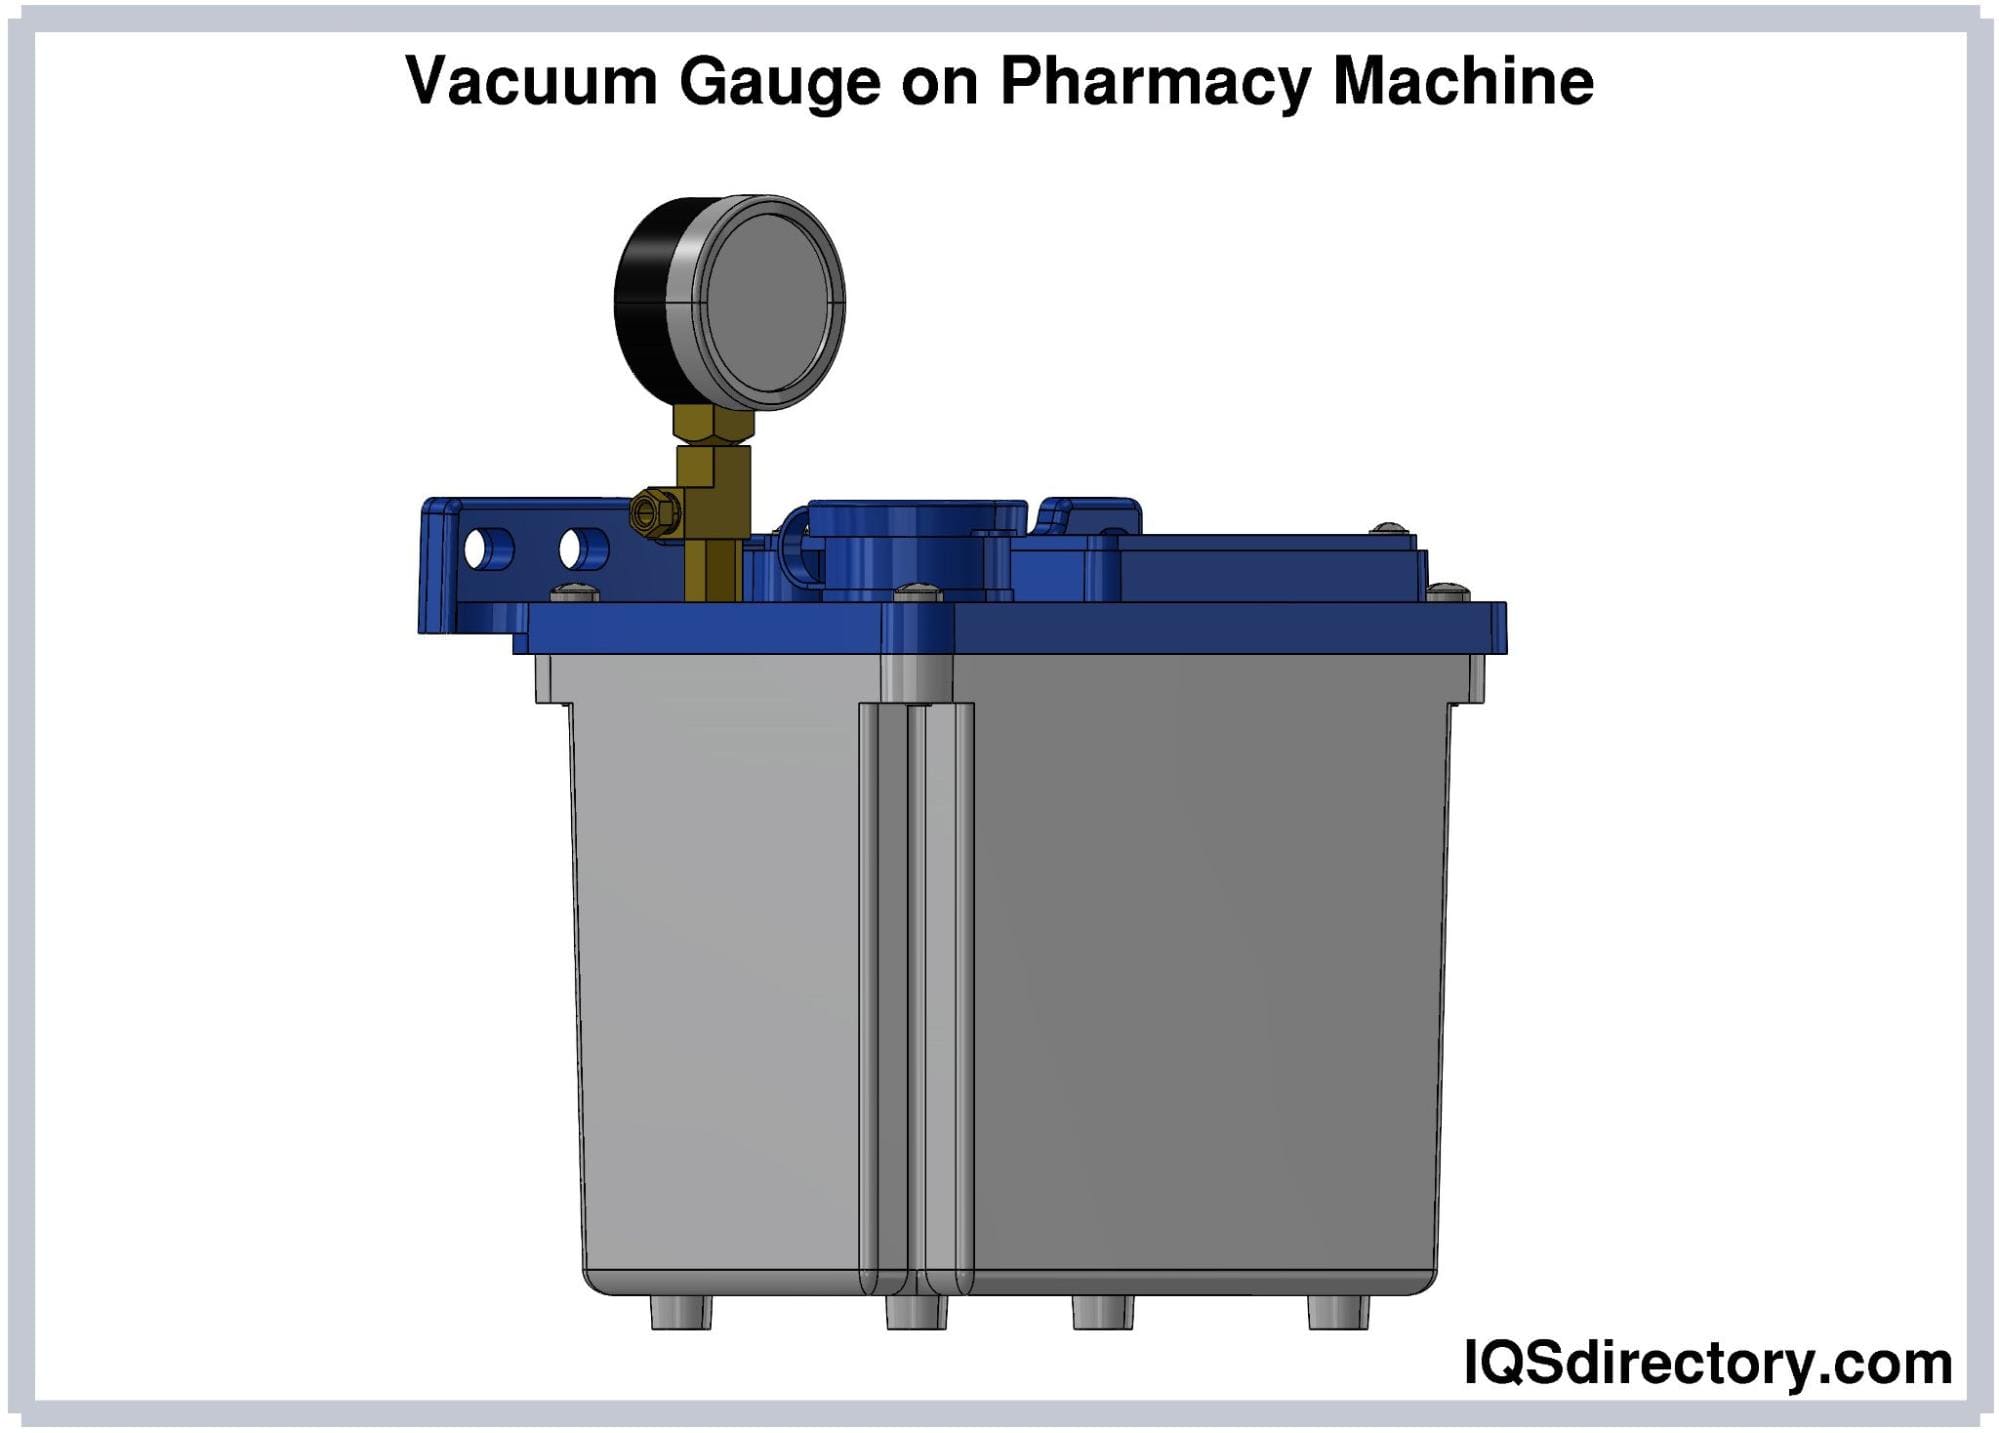 Vacuum Gauge on Pharmacy Machine